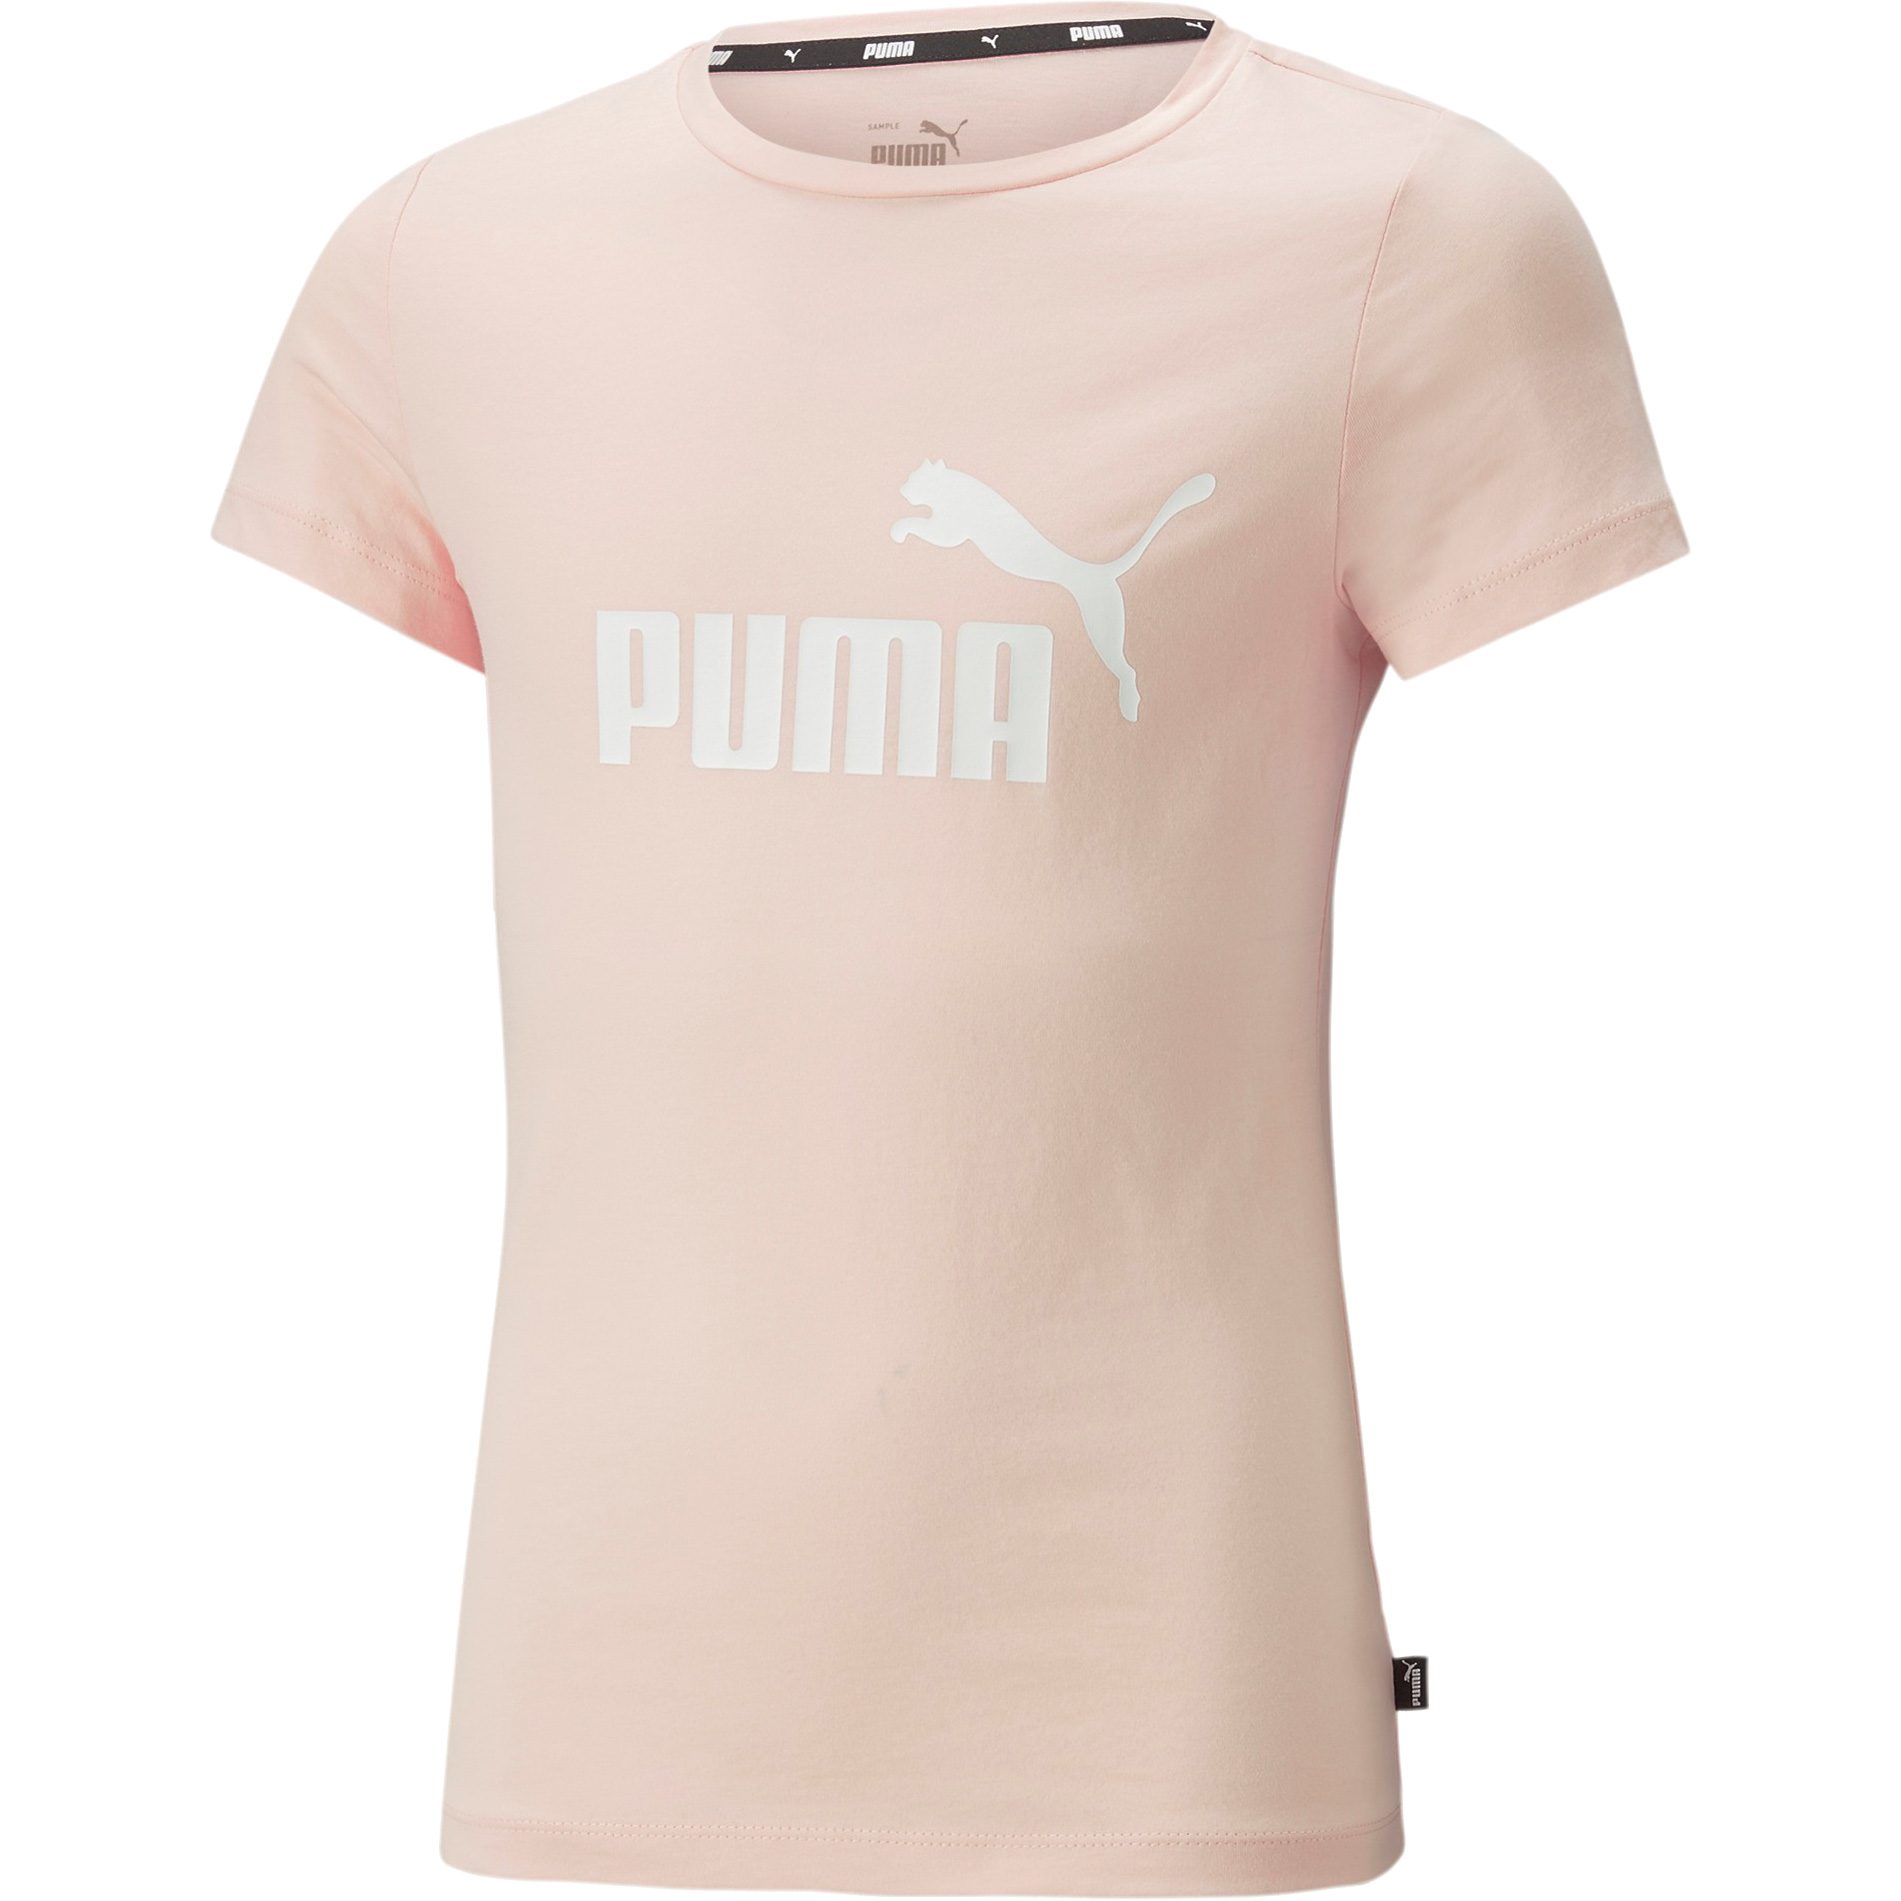 at Bittl T-Shirt Shop - Sport Logo rose Girls Essentials Puma dust